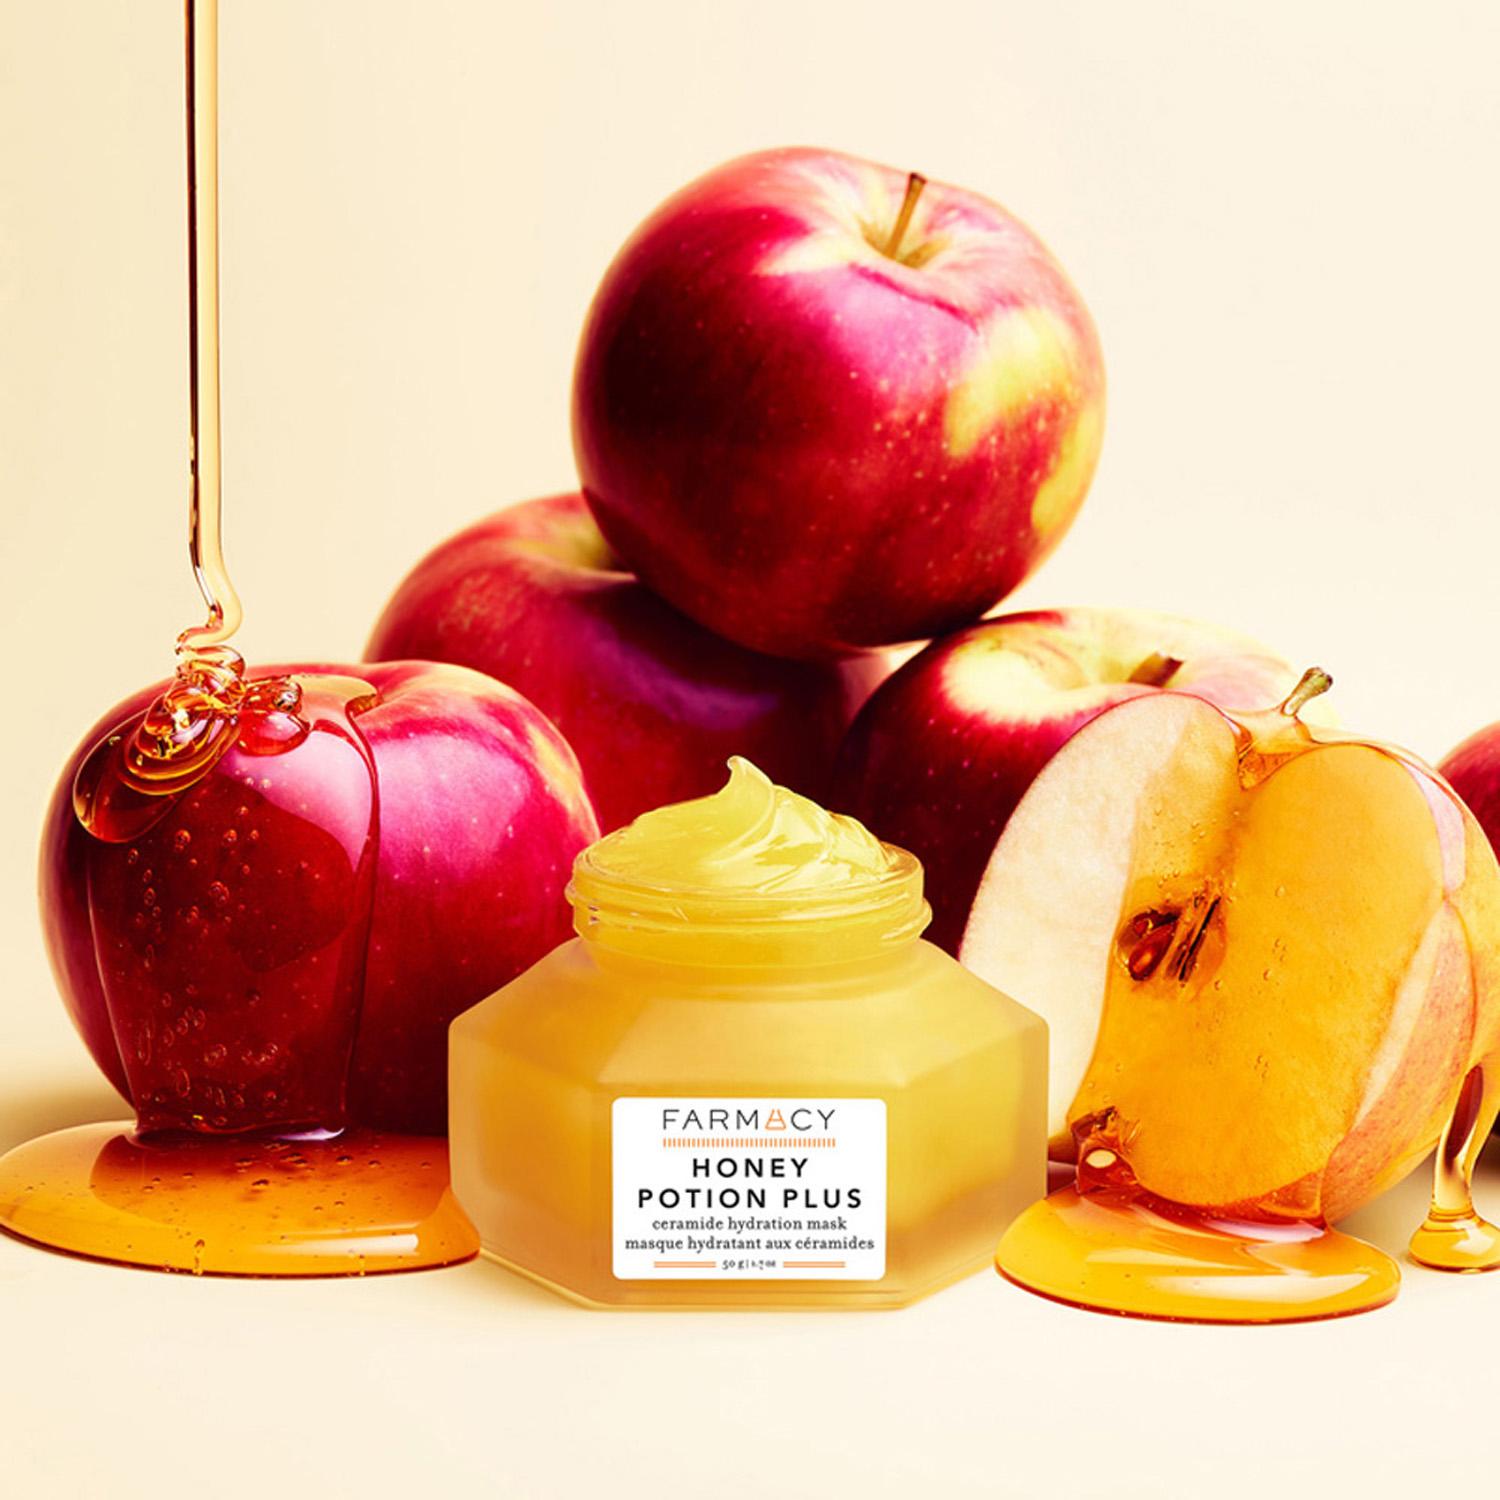 Farmacy Beauty | Farmacy Beauty Honey Potion Plus Ceramide Hydration Mask (50g)